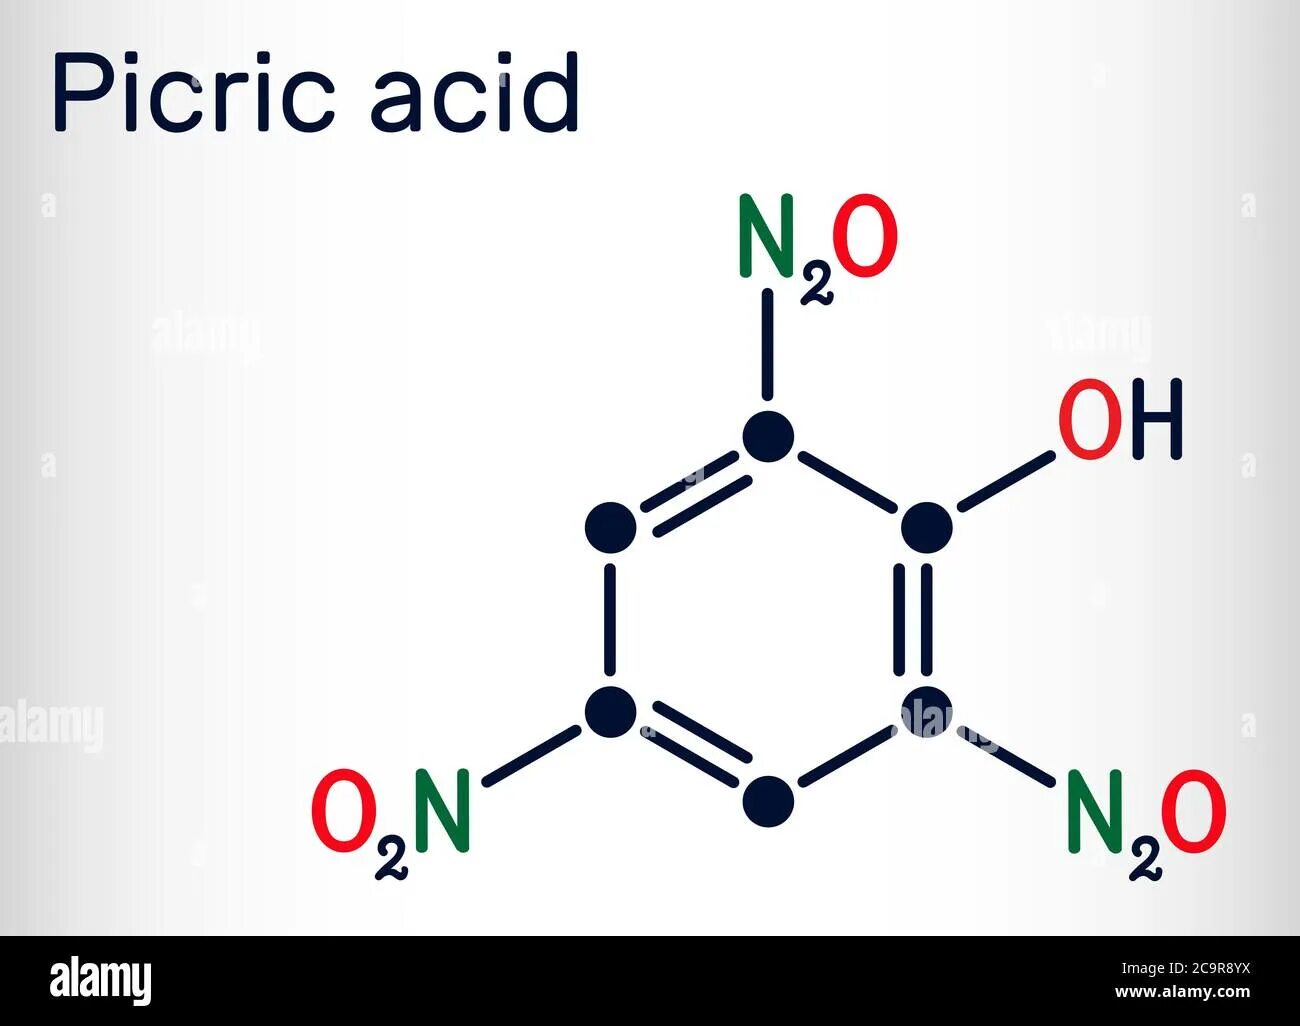 2 4 6 тринитрофенол формула. Тринитрофенол пикриновая кислота. Picric acid. Тринитрофенол формула молекулярная. Тринитрофенол структурная формула.